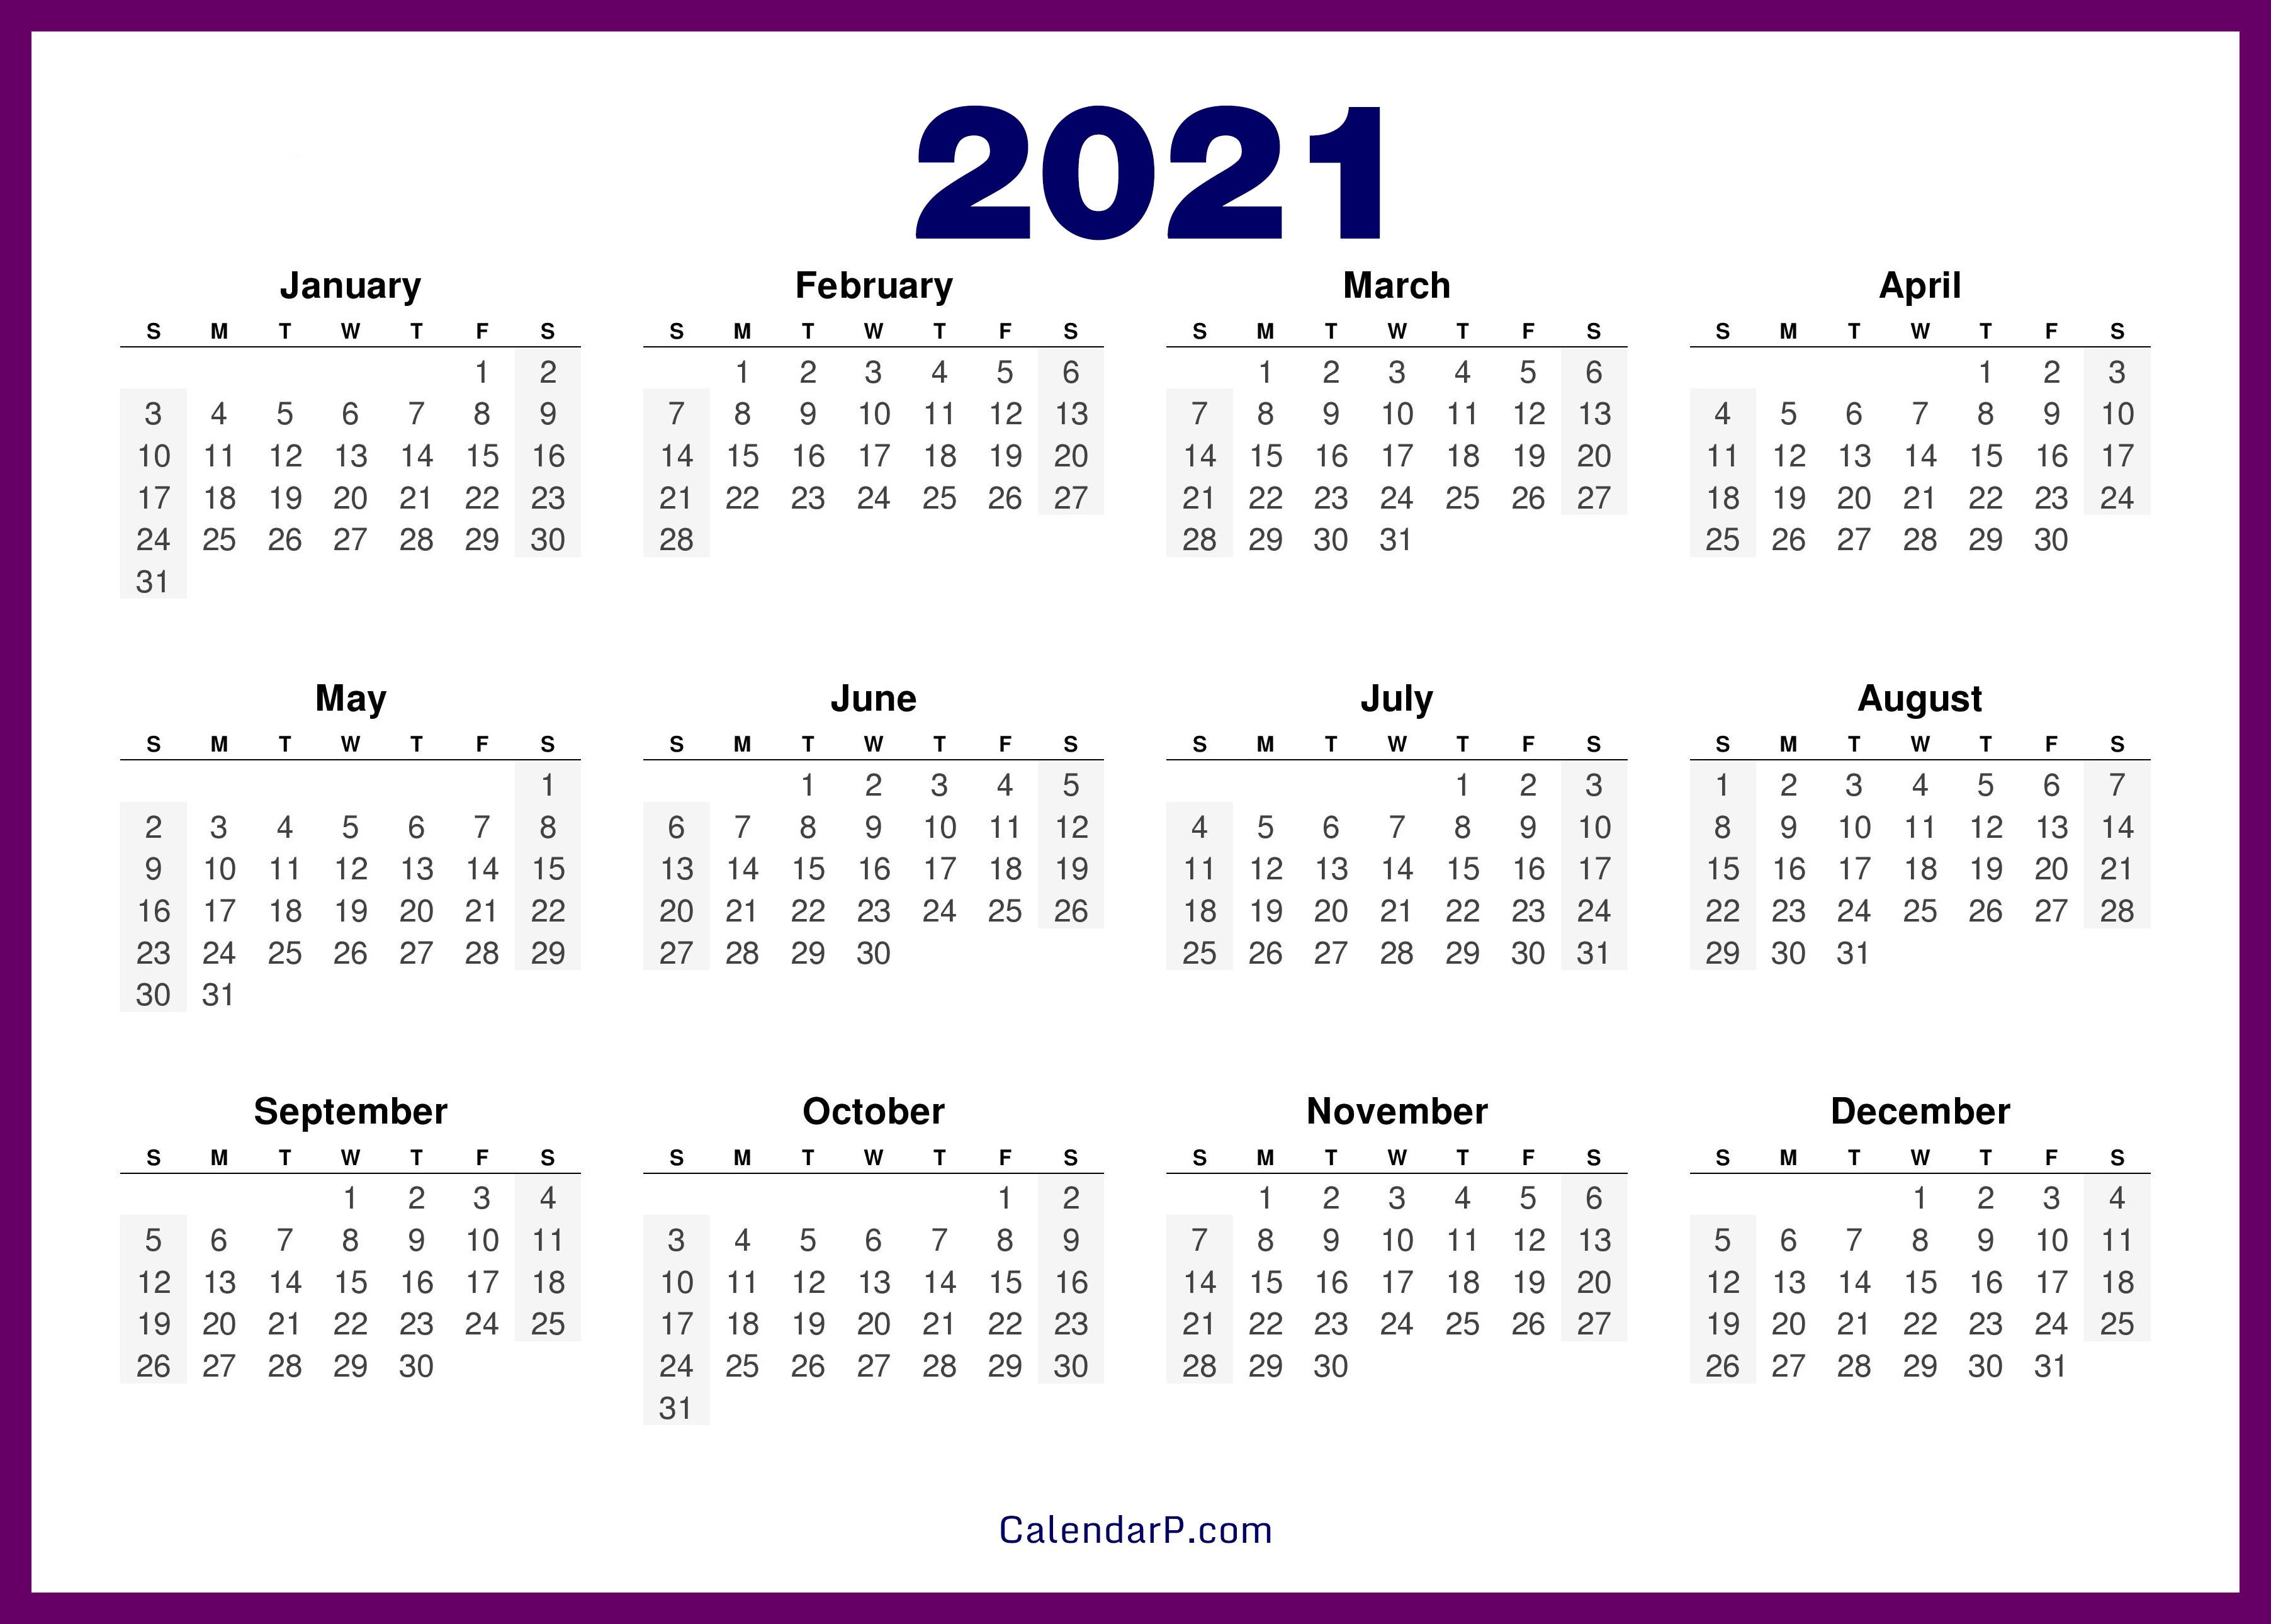 printable-5-by-8-2021-calendar-8-5-x-11-inch-bold-2021-calendar-by